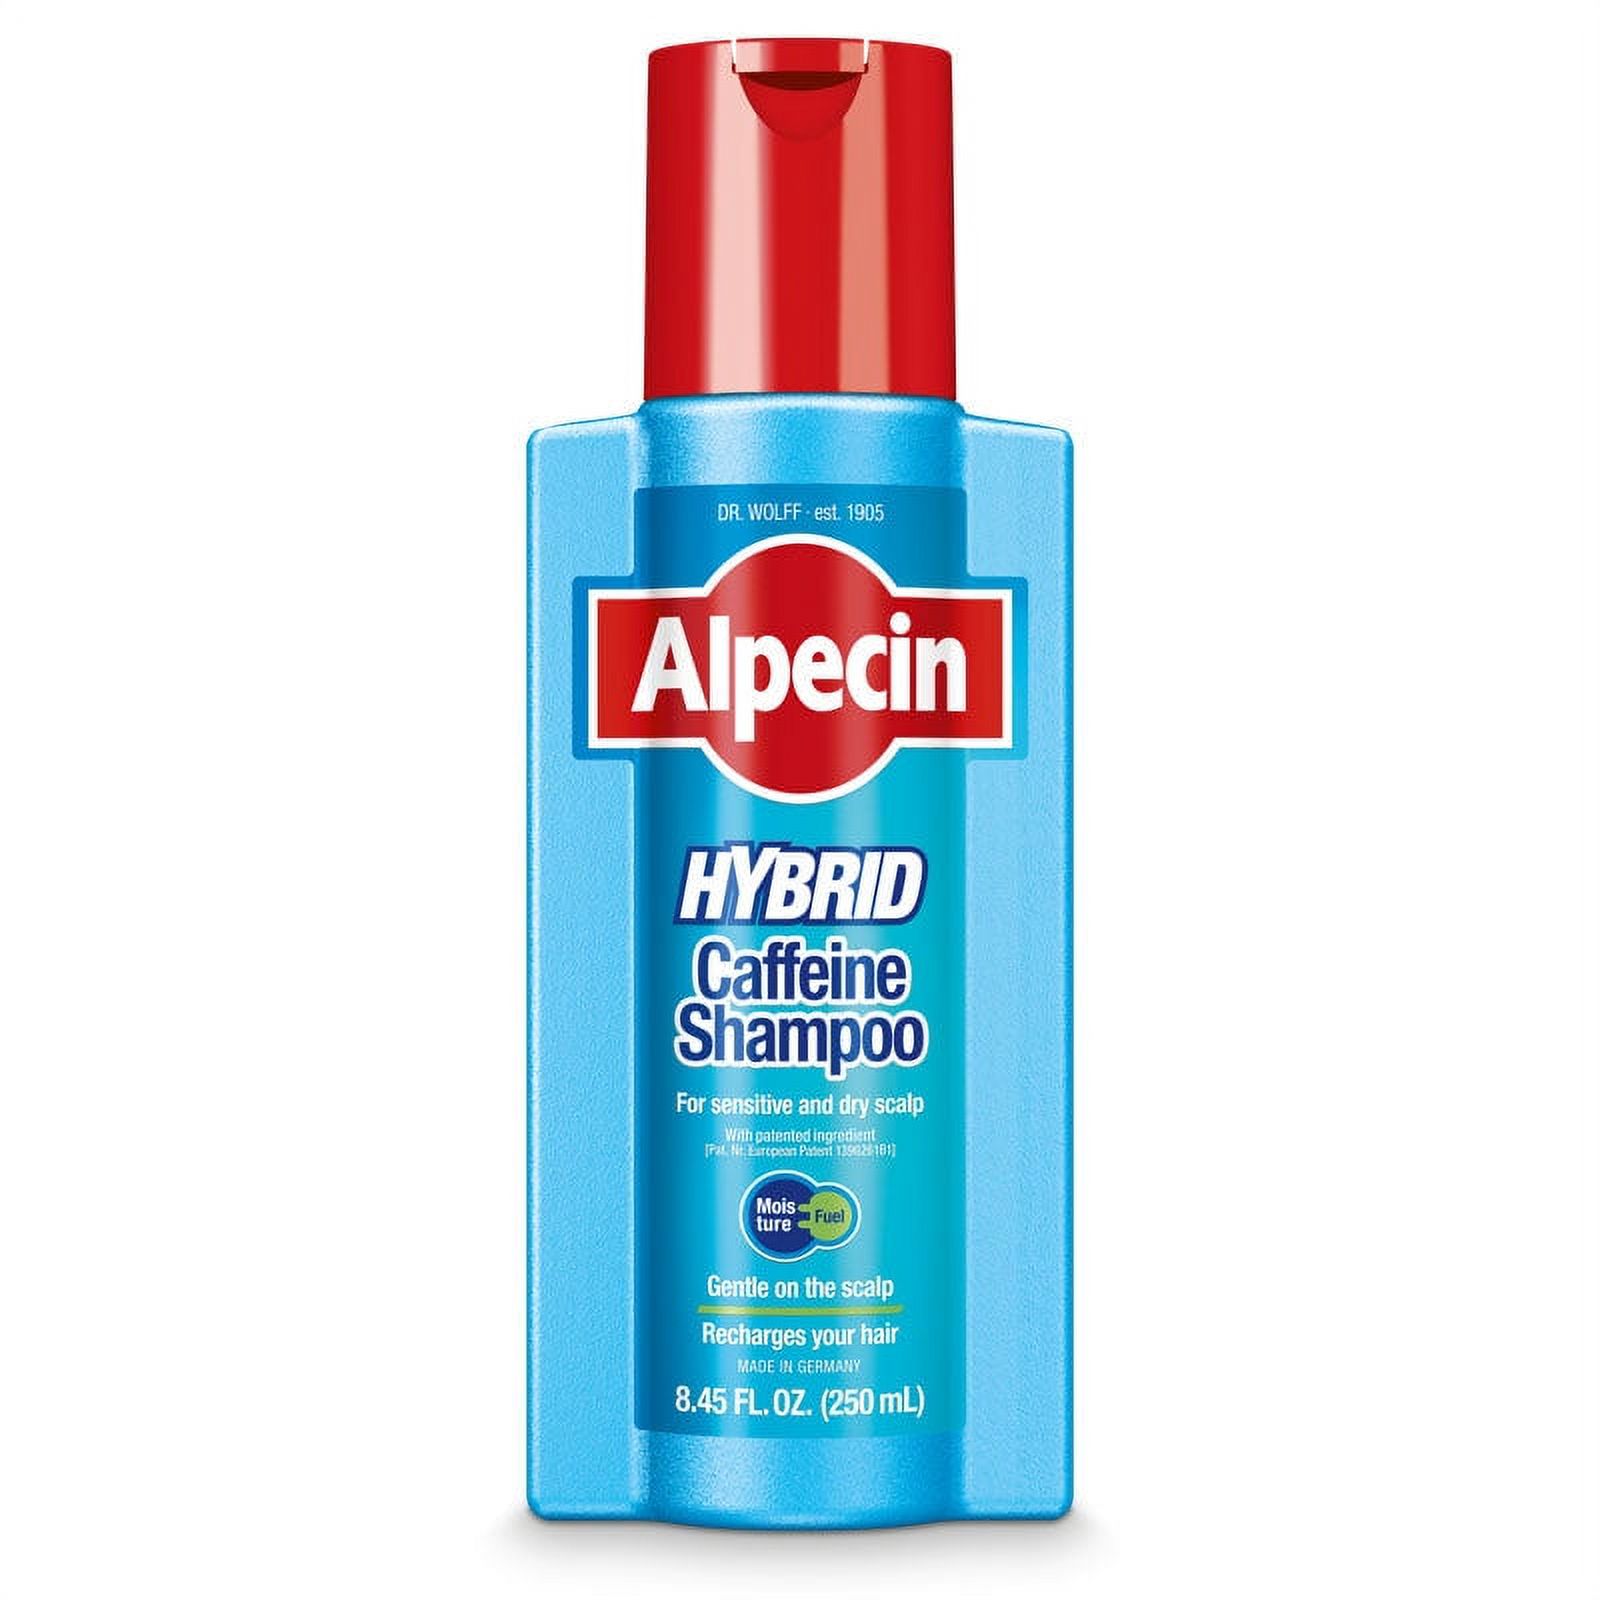 Alpecin Hybrid Caffeine Shampoo for Men with Dry, Itchy, Sensitive Scalps Moisturizes Thinning Hair Natural Hair Growth, 8.45 fl. oz. - image 1 of 5